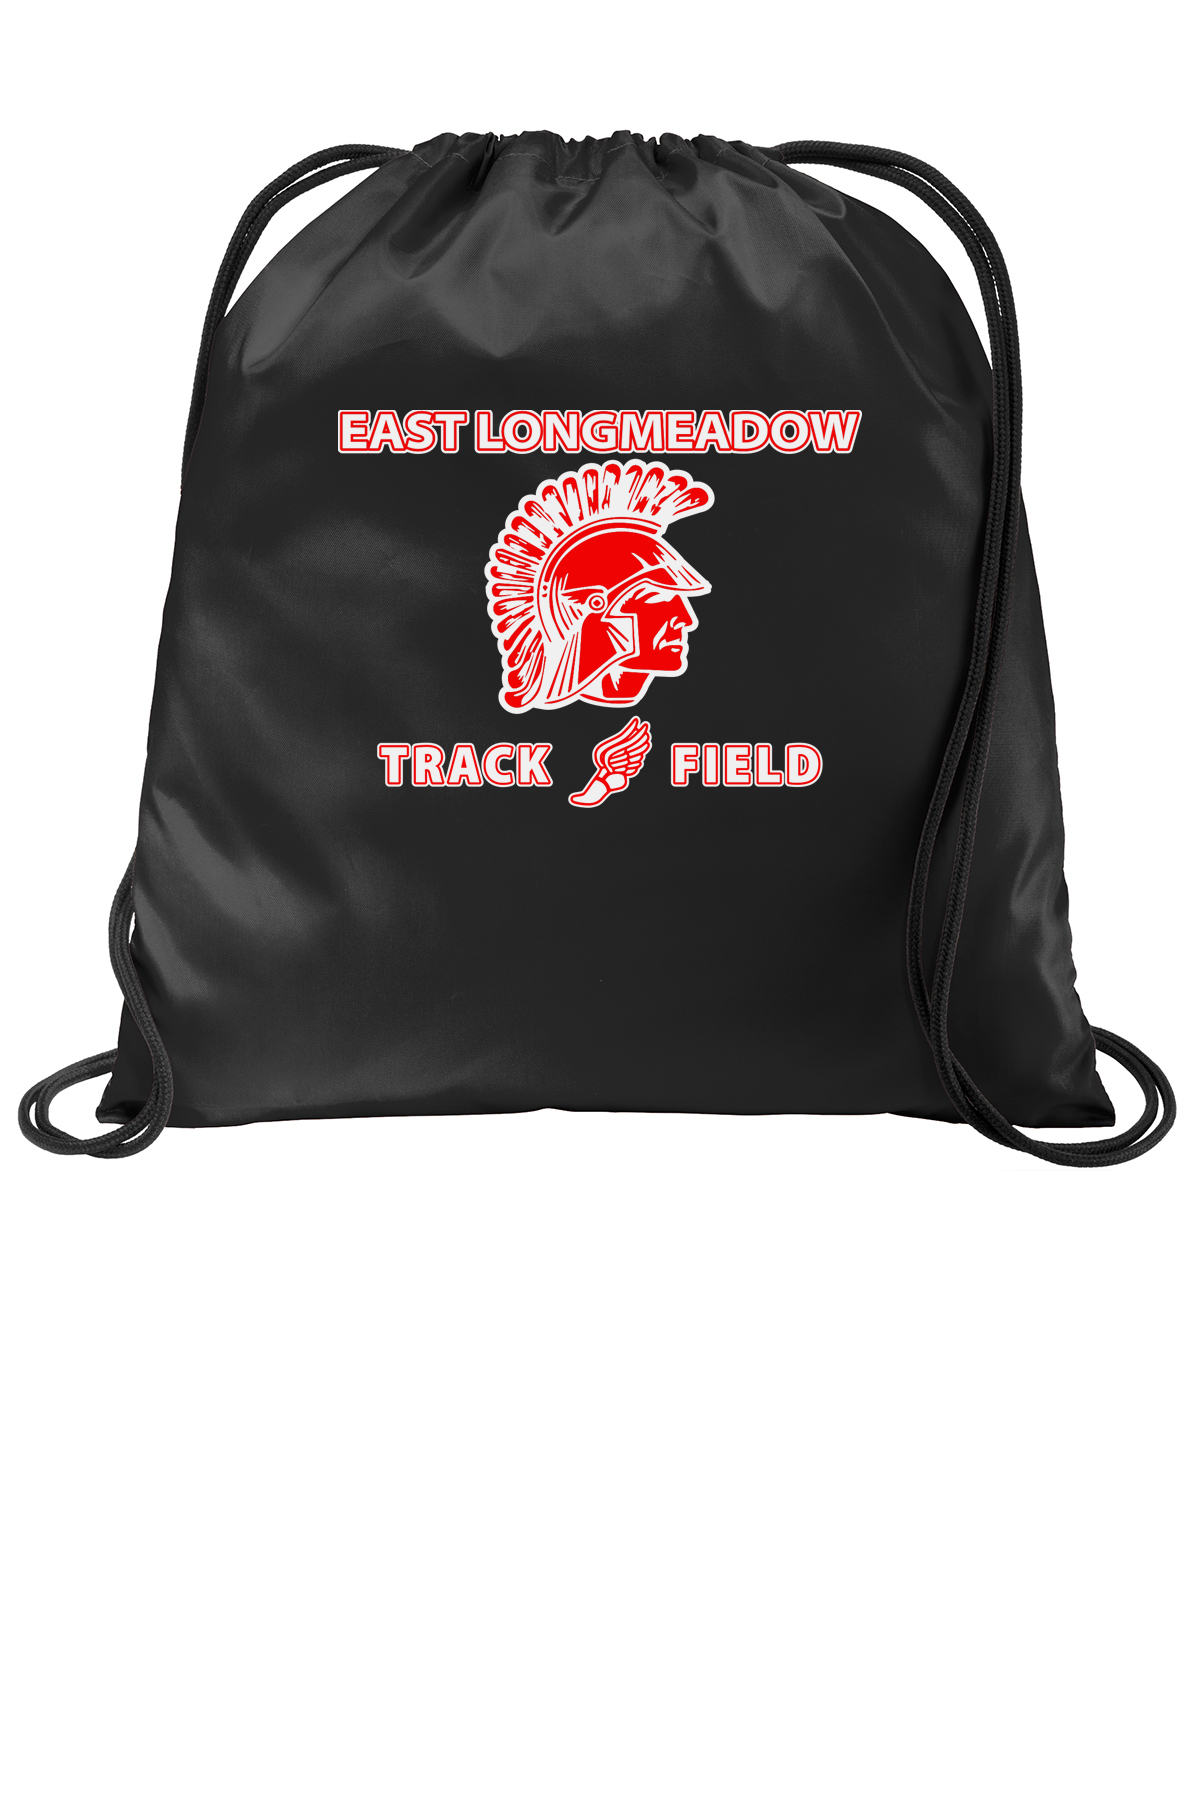 East Longmeadow Track and Field Black Cinch Pack